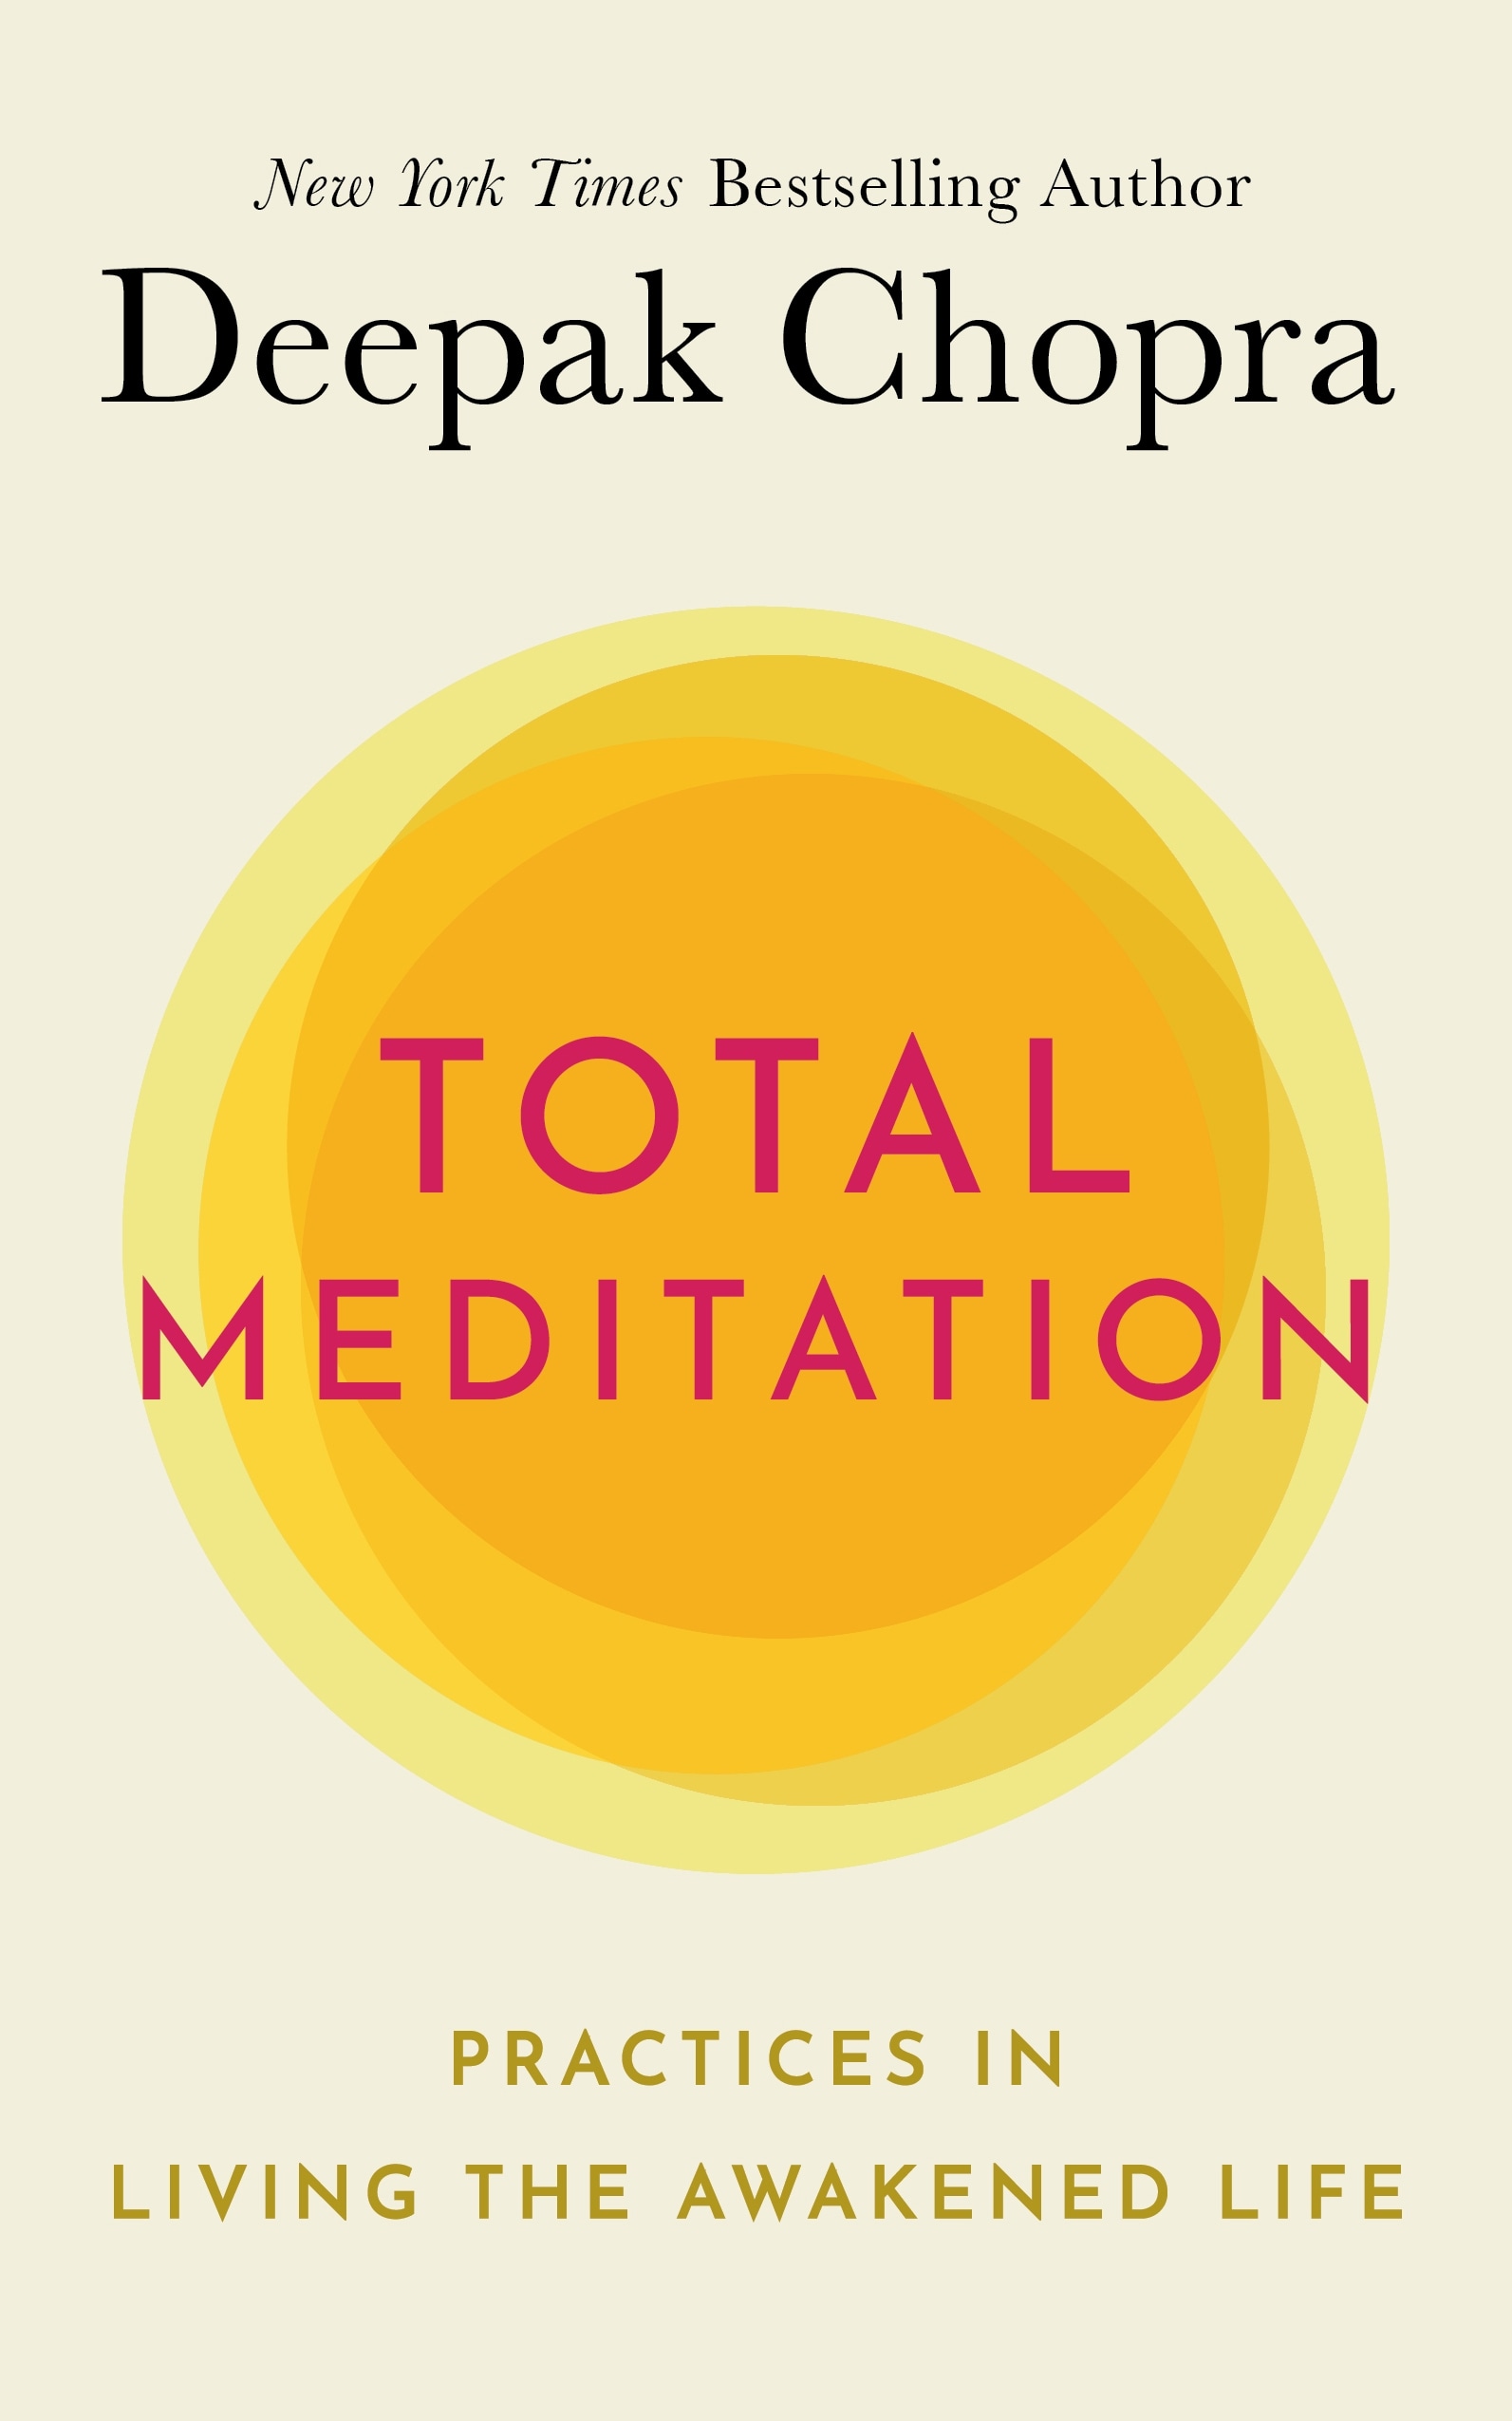 Book “Total Meditation” by Deepak Chopra — September 24, 2020